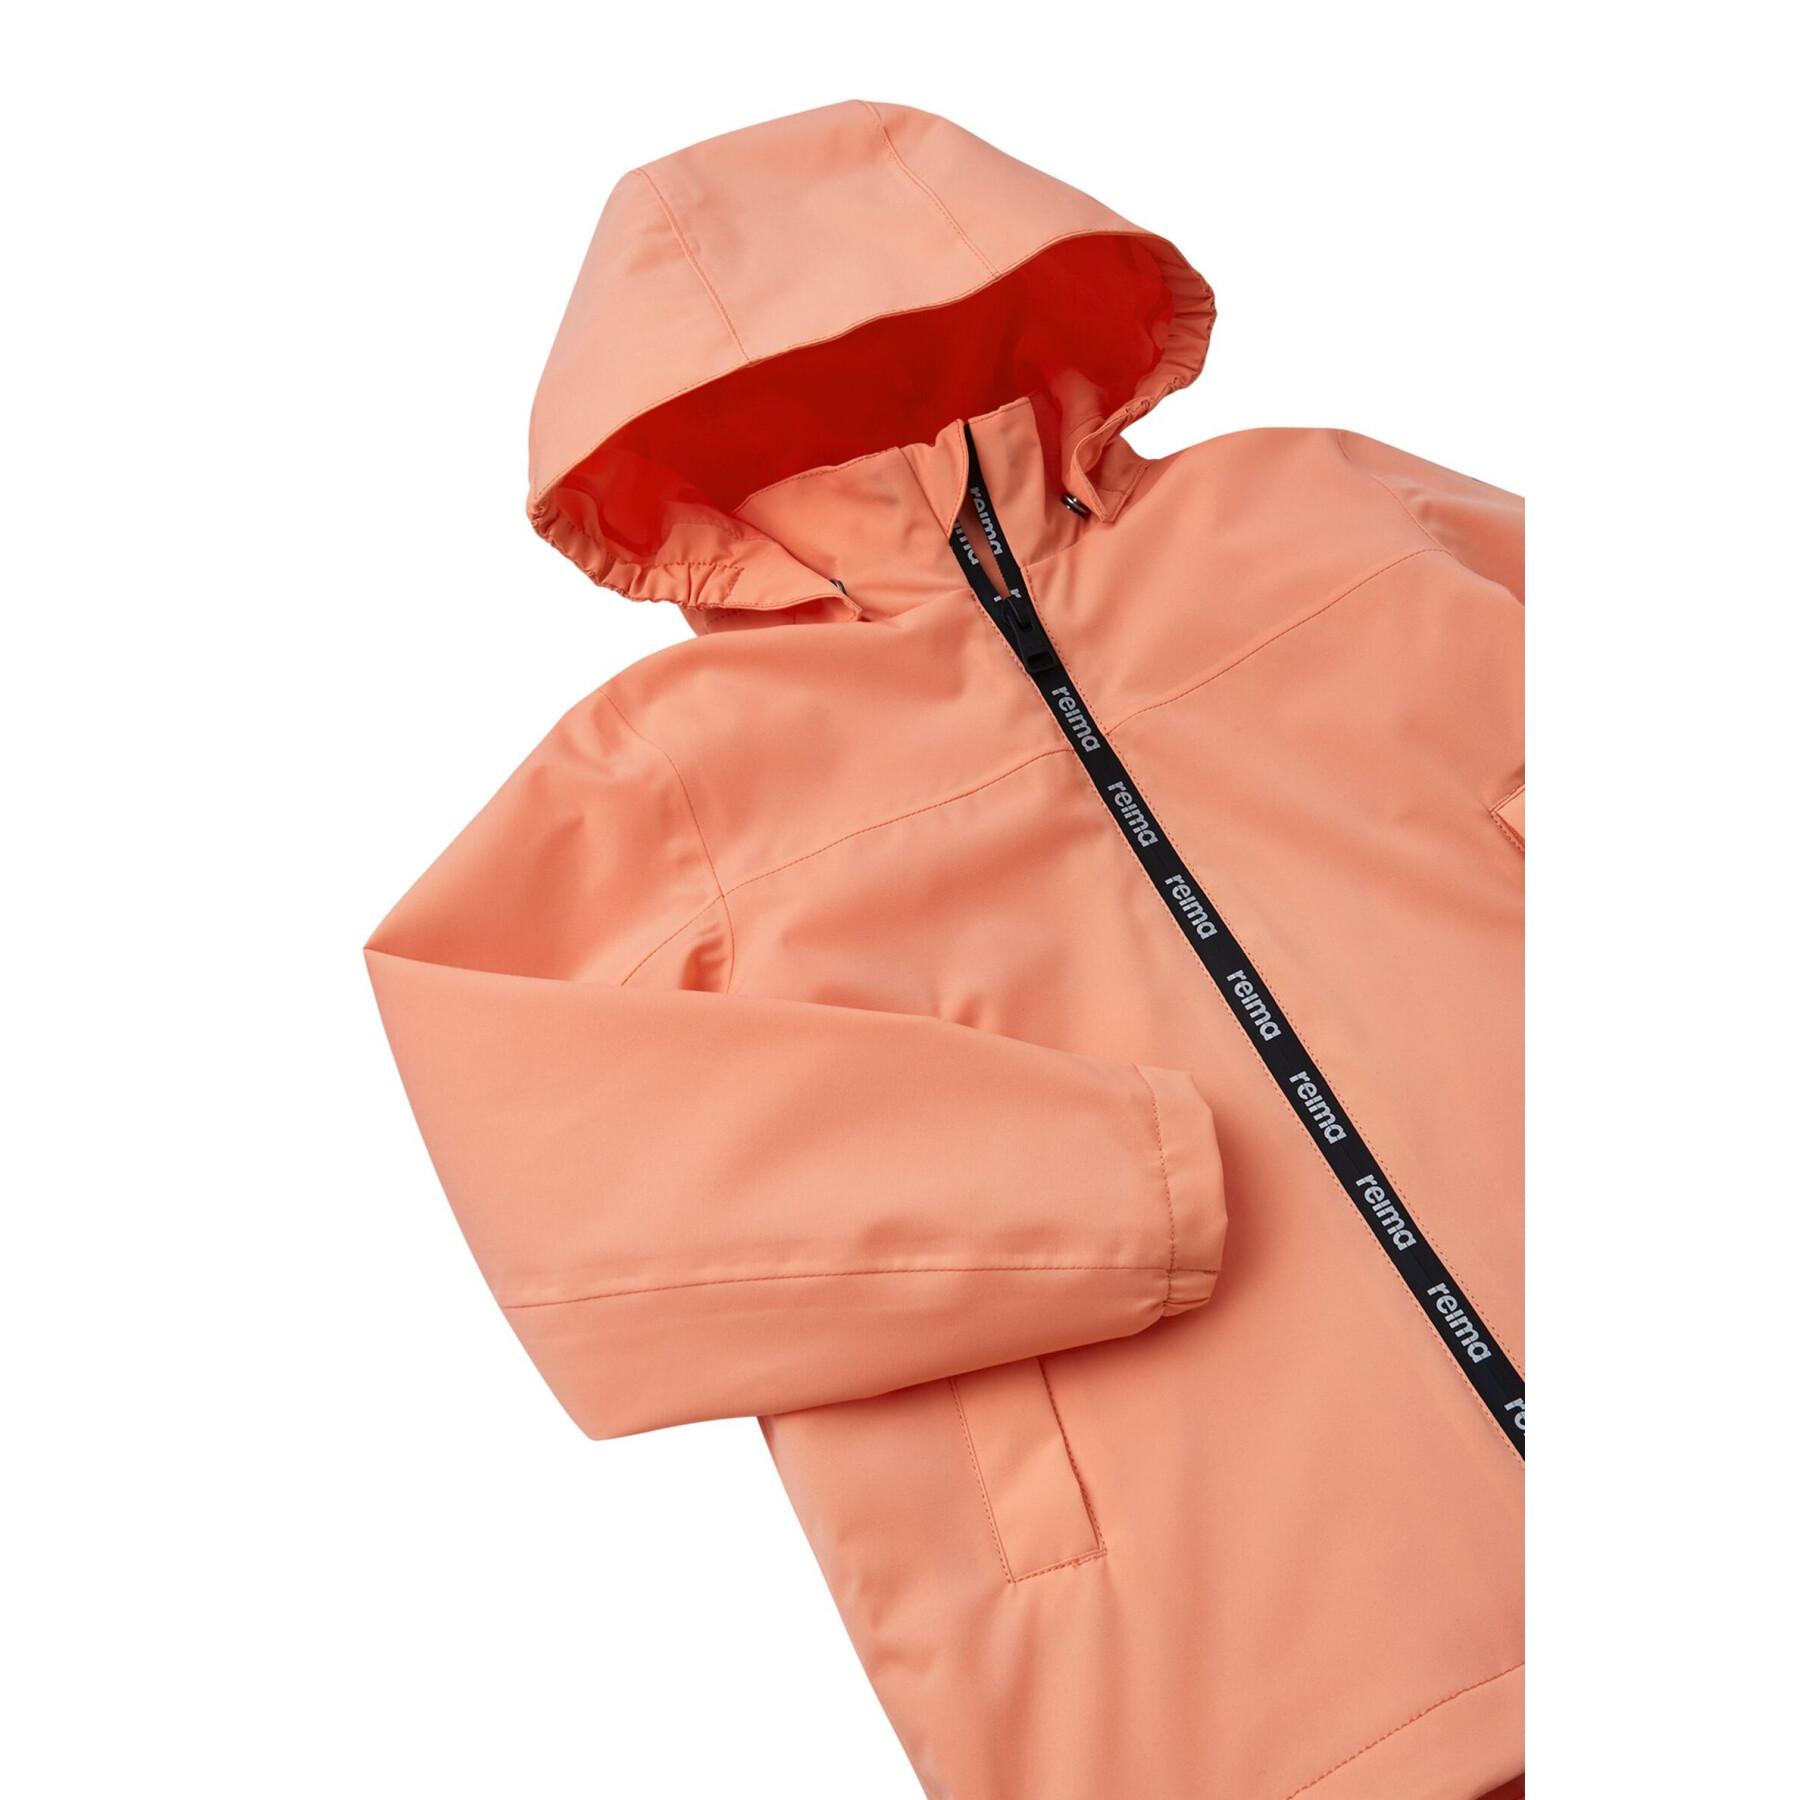 Waterproof jacket for children Reima Reima tec Finholma